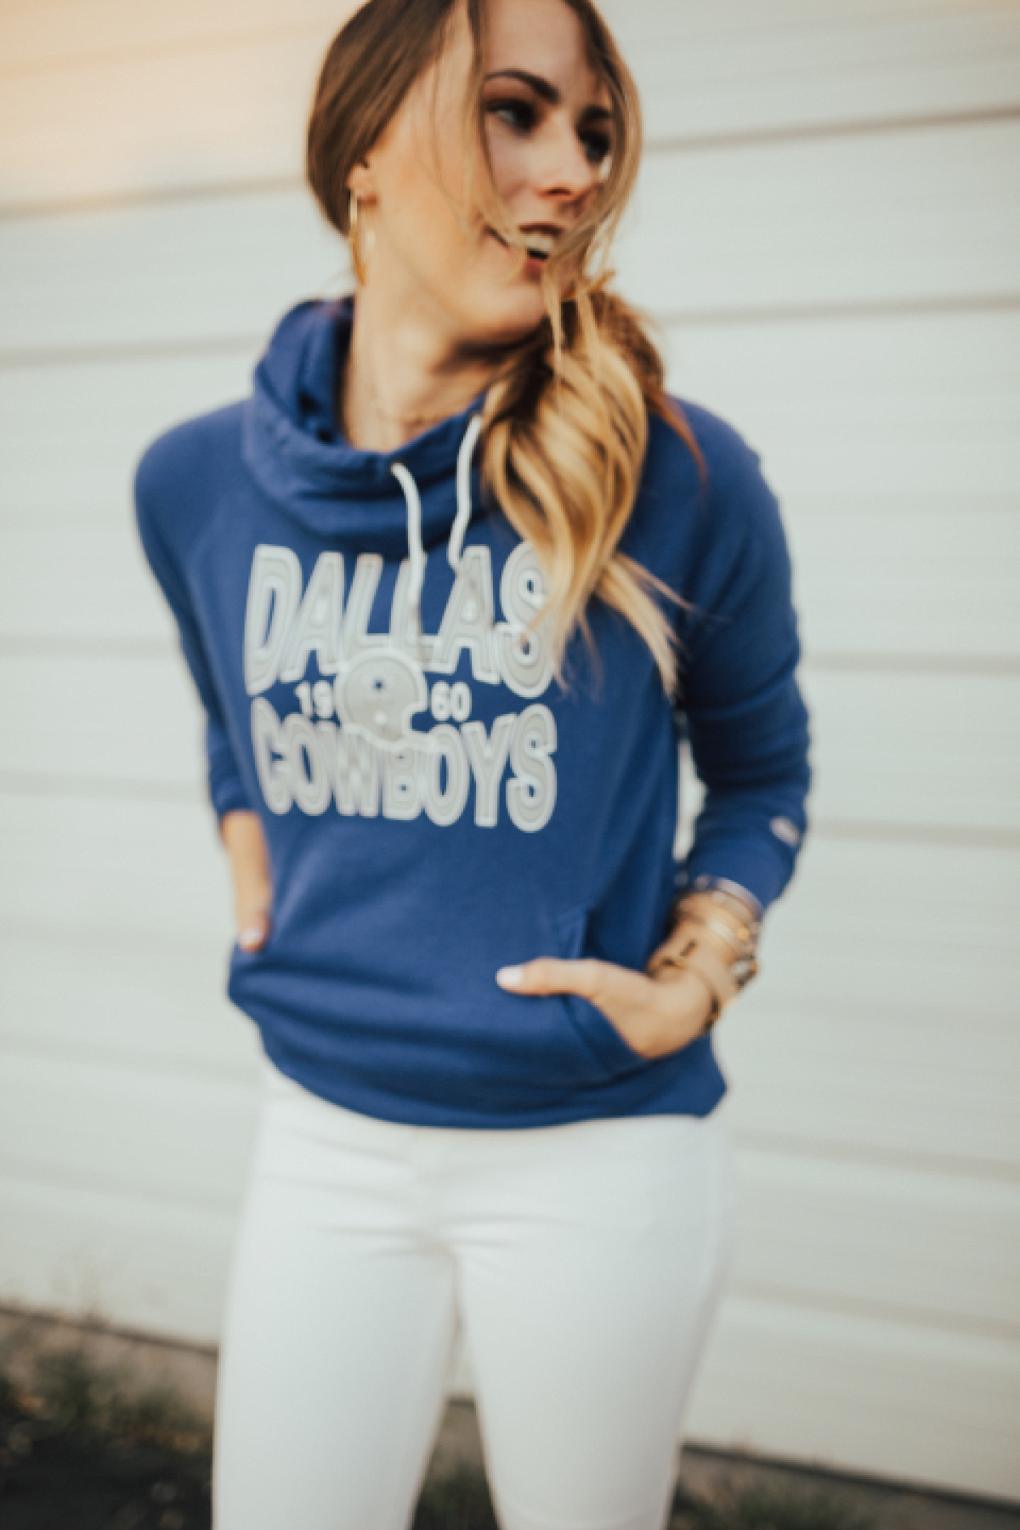 Dallas Cowboys Sweater: Staying Cozy for Football Season by Utah fashion blogger Dani Marie